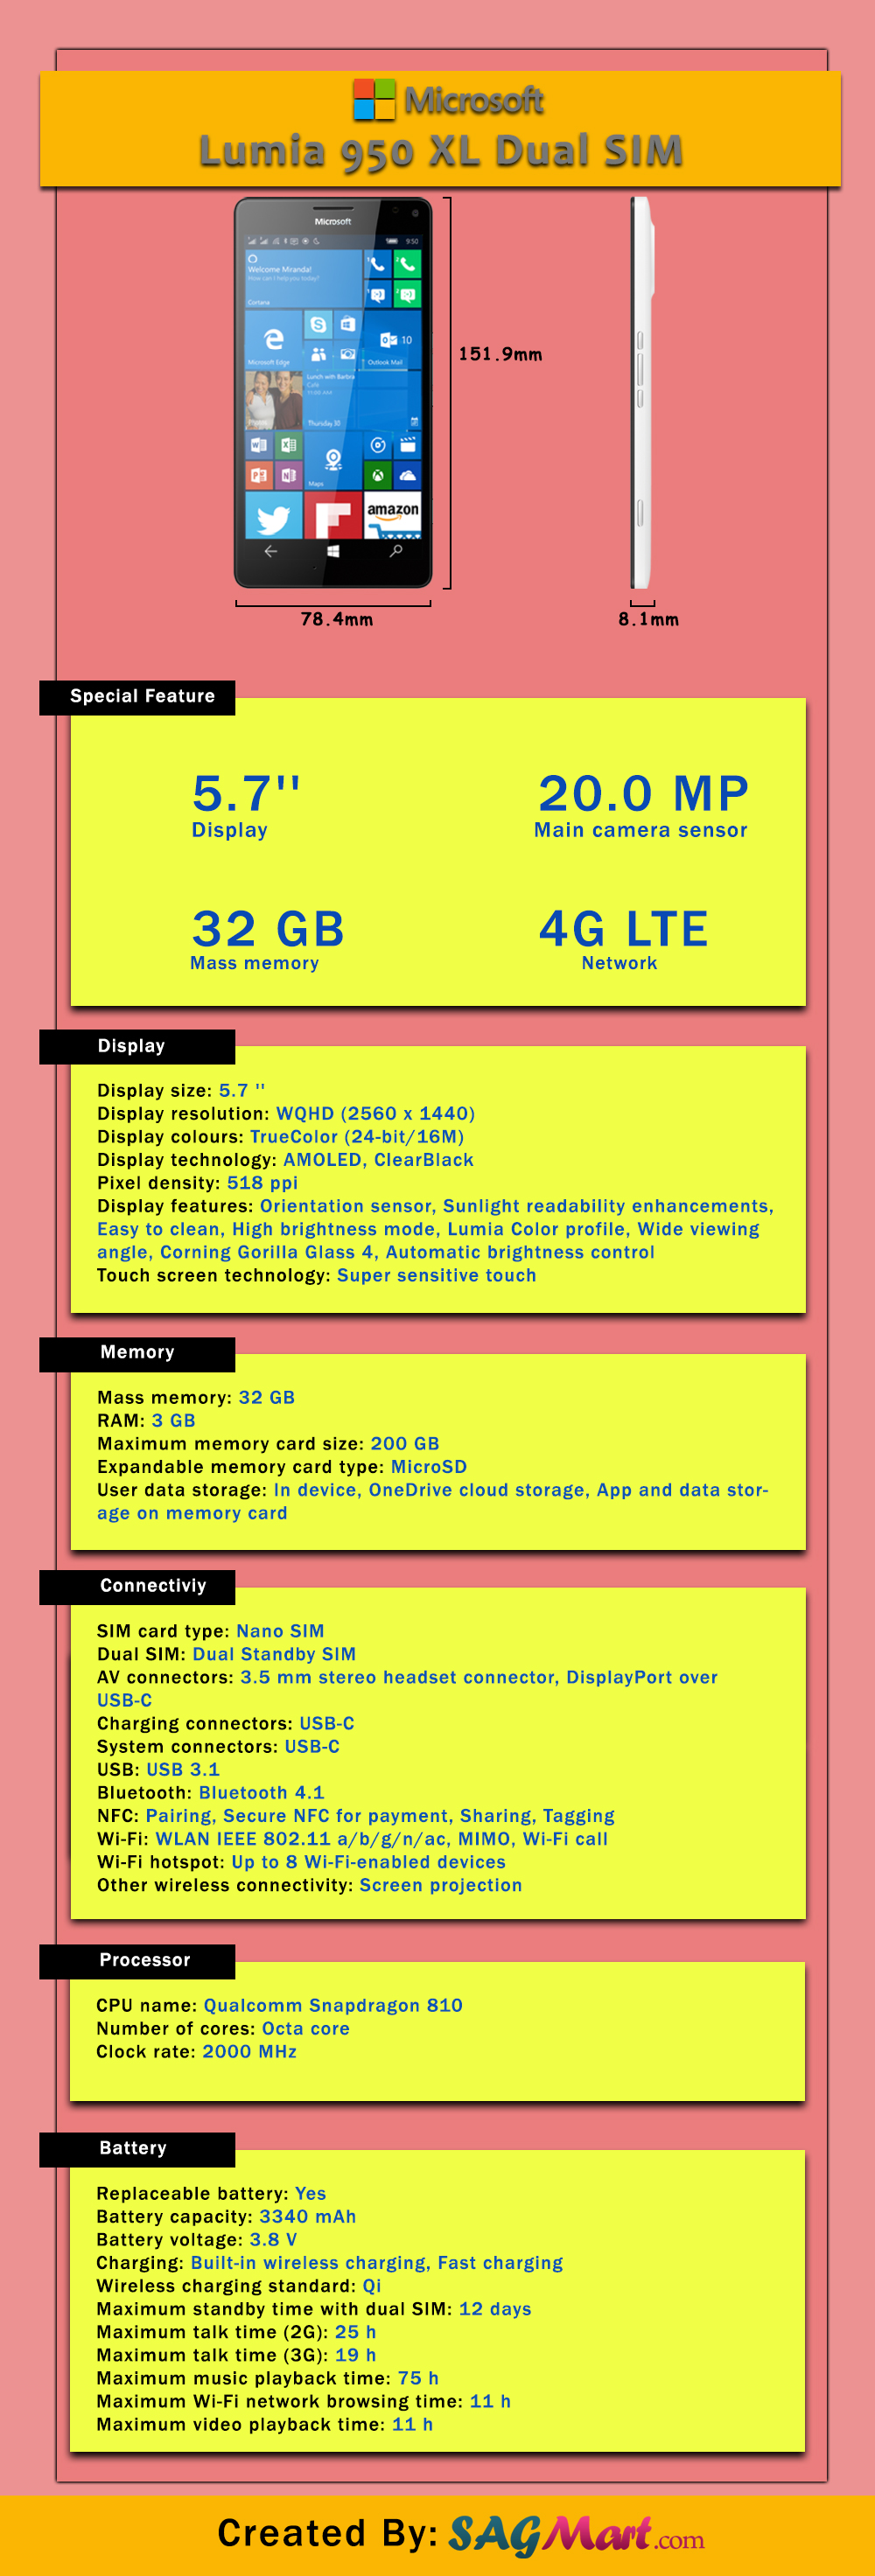 Microsoft Lumia 950 XL Dual SIM infographic